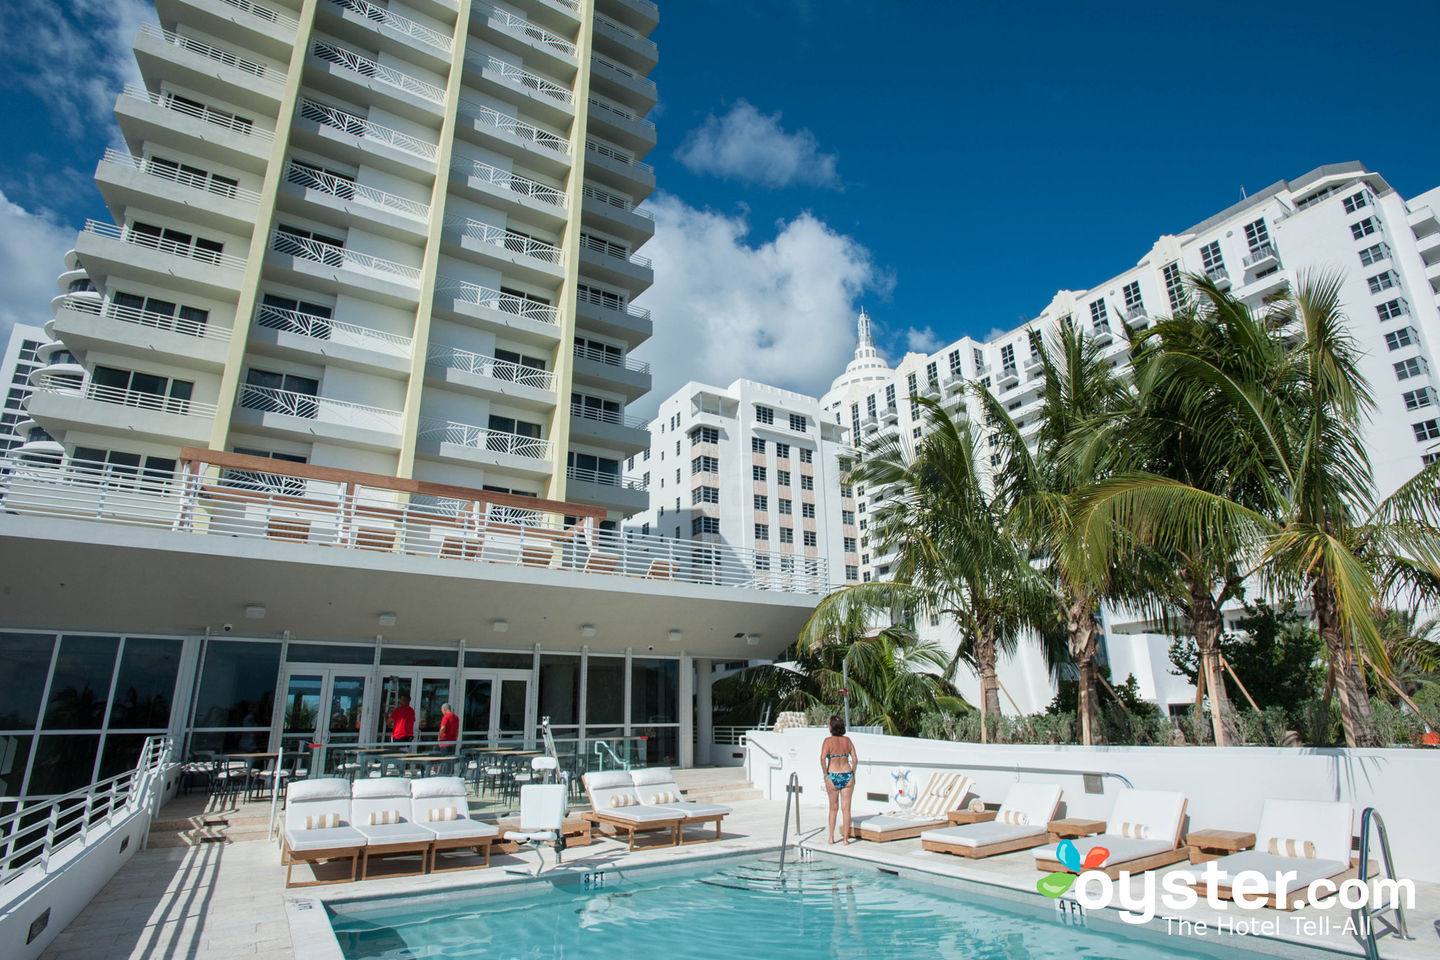 Hotel Park Royal Miami Beach, United States